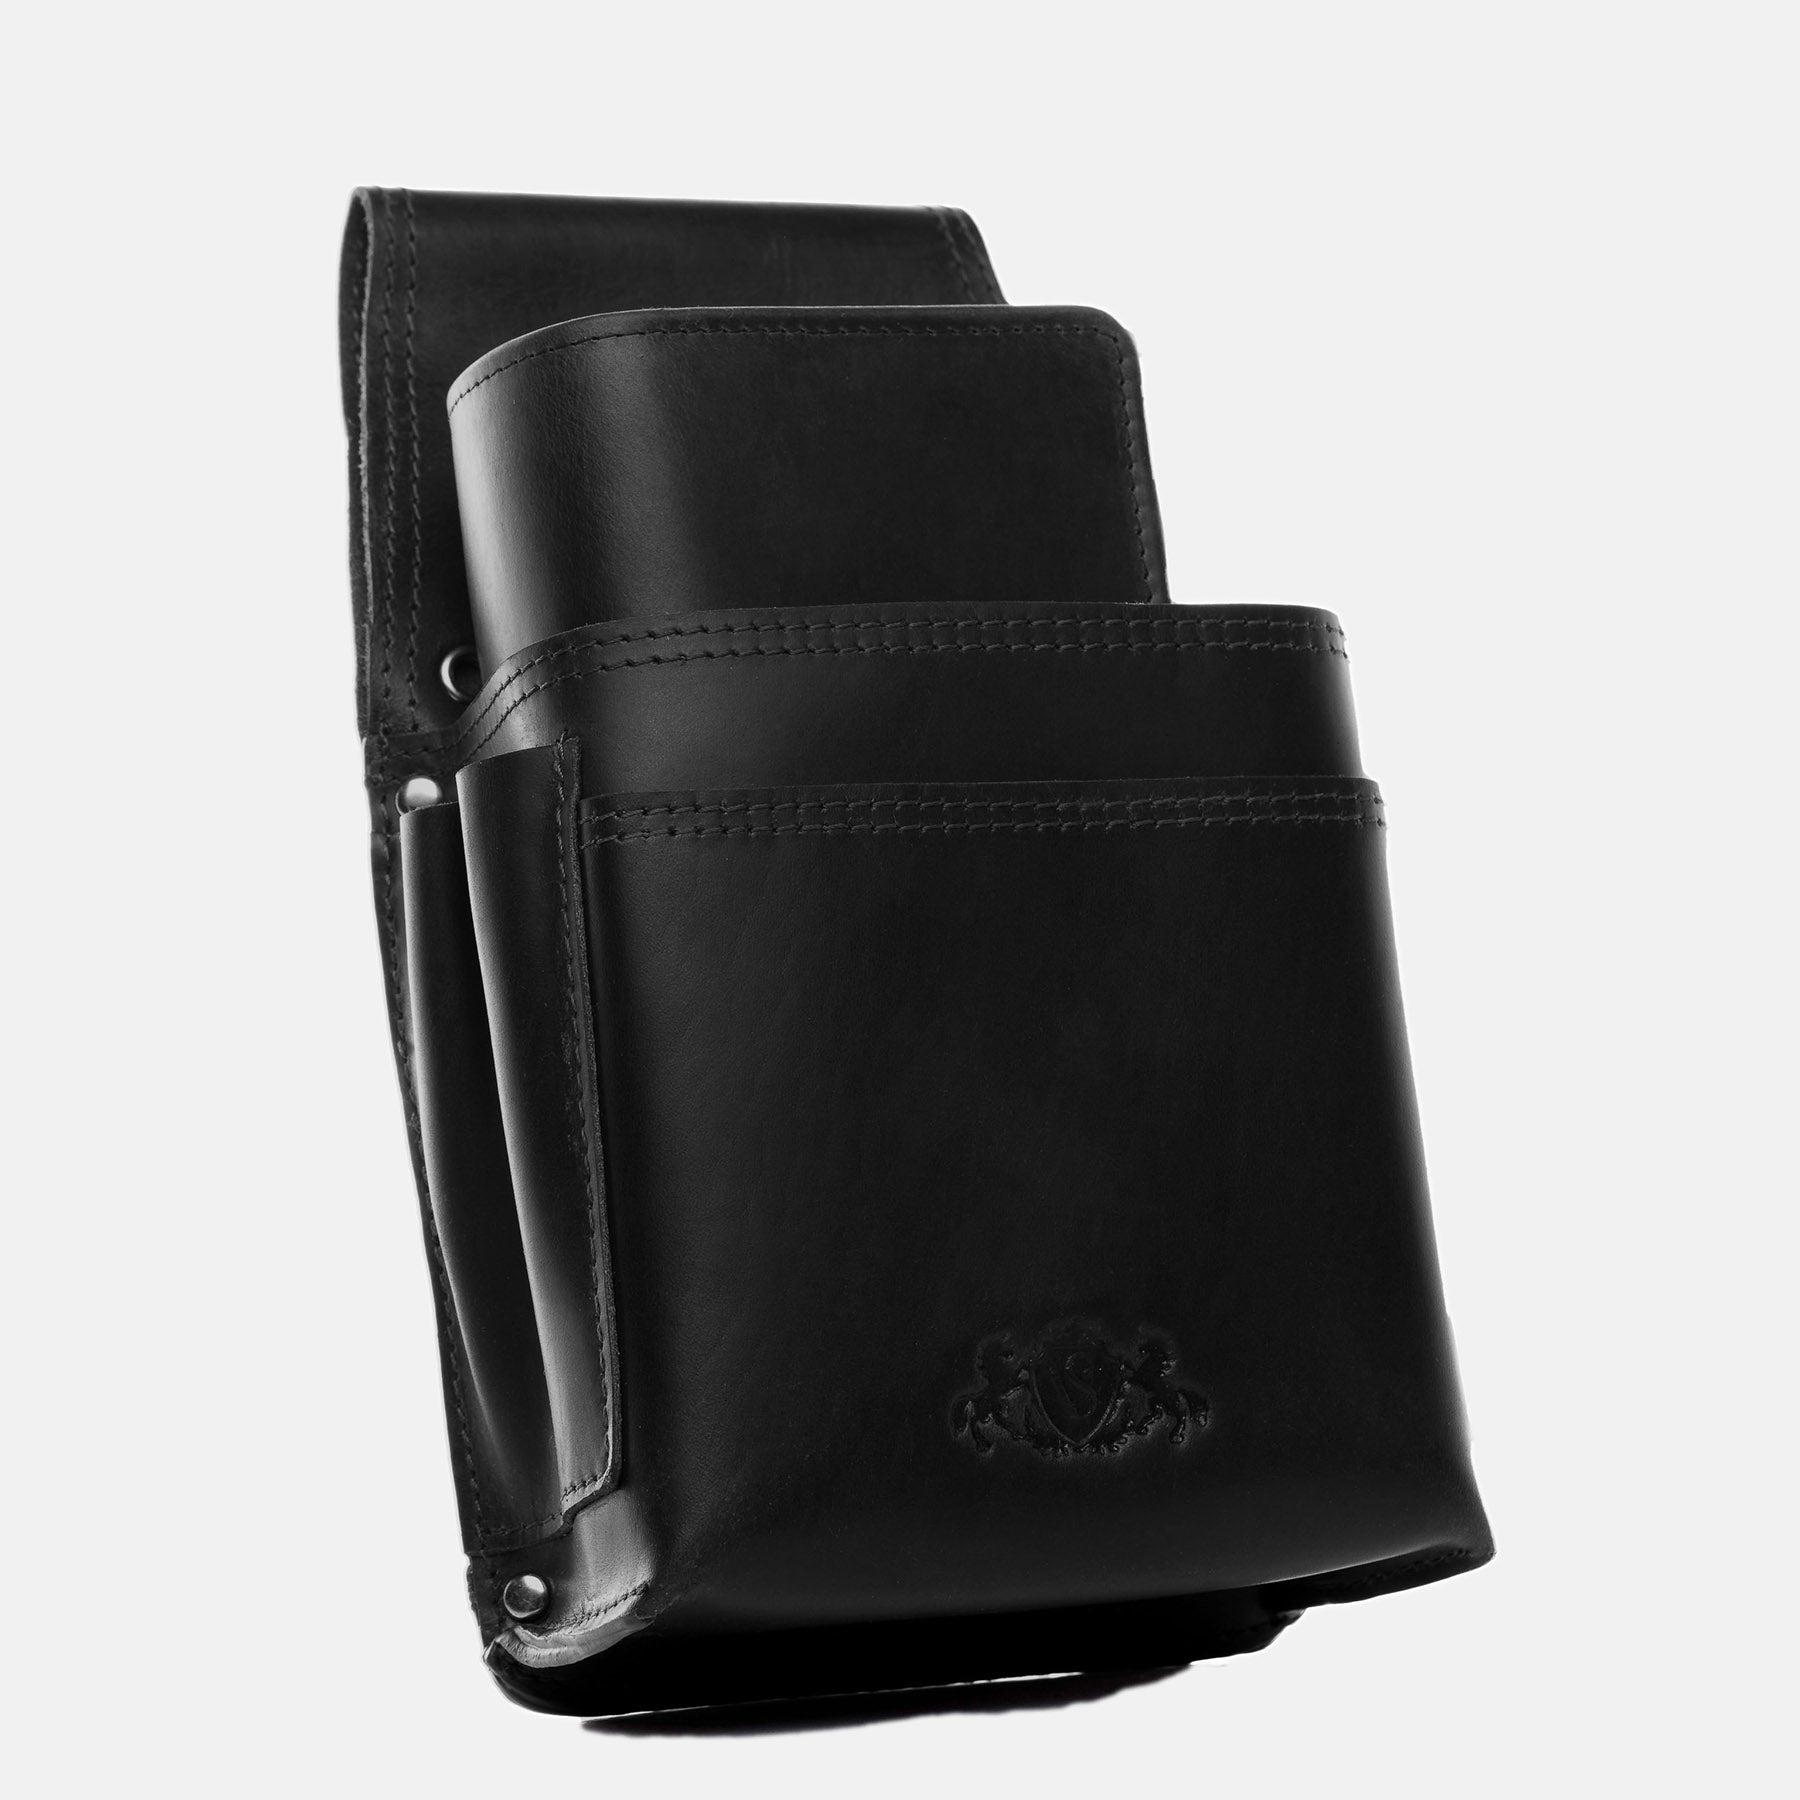 Waiter wallet & holster ABERDEEN smooth leather black